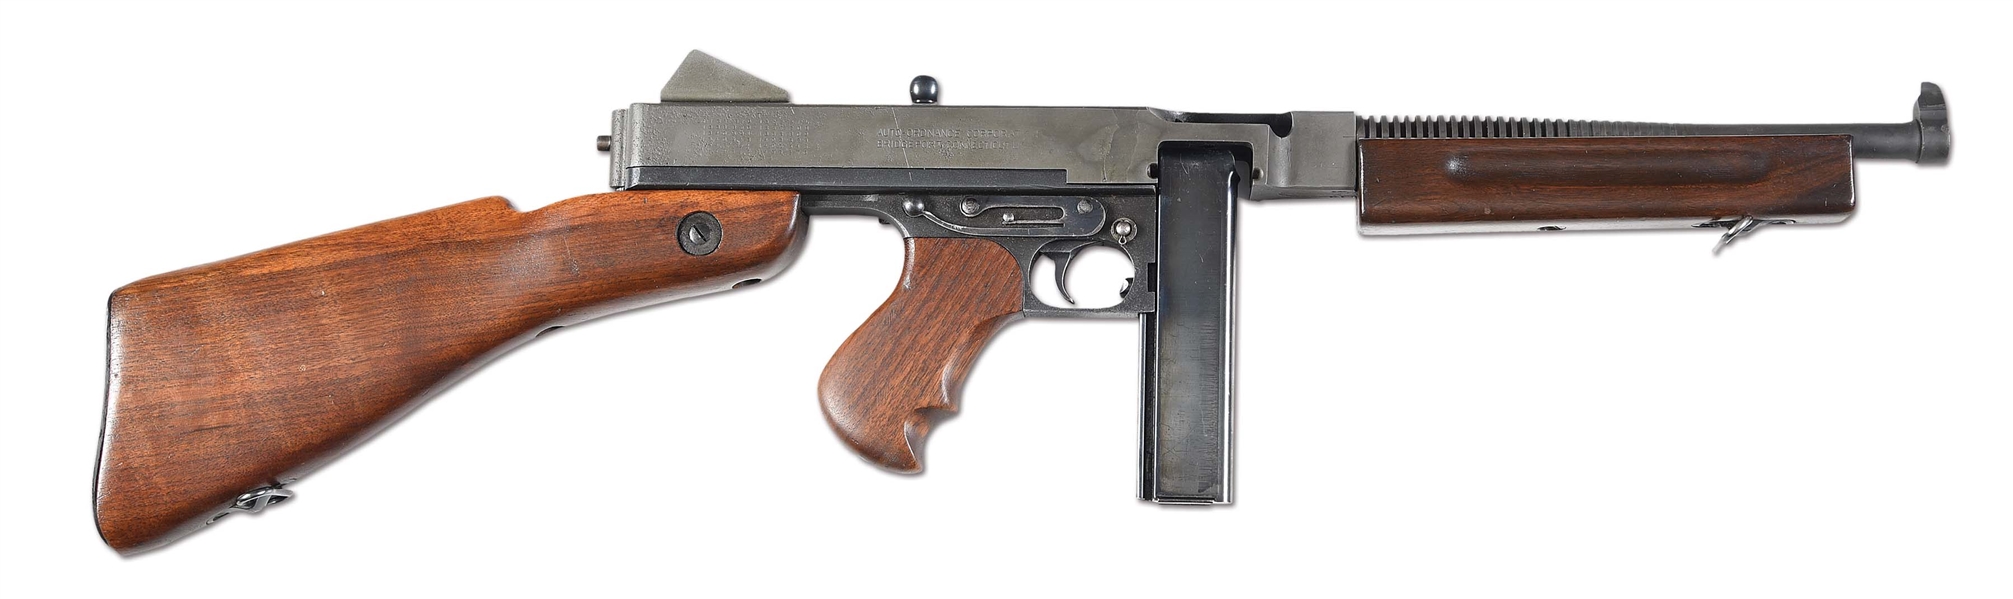 (N) US MODEL 1928A1 THOMPSON MACHINE GUN BY AUTO-ORDNANCE, BRIDGEPORT (CURIO AND RELIC).